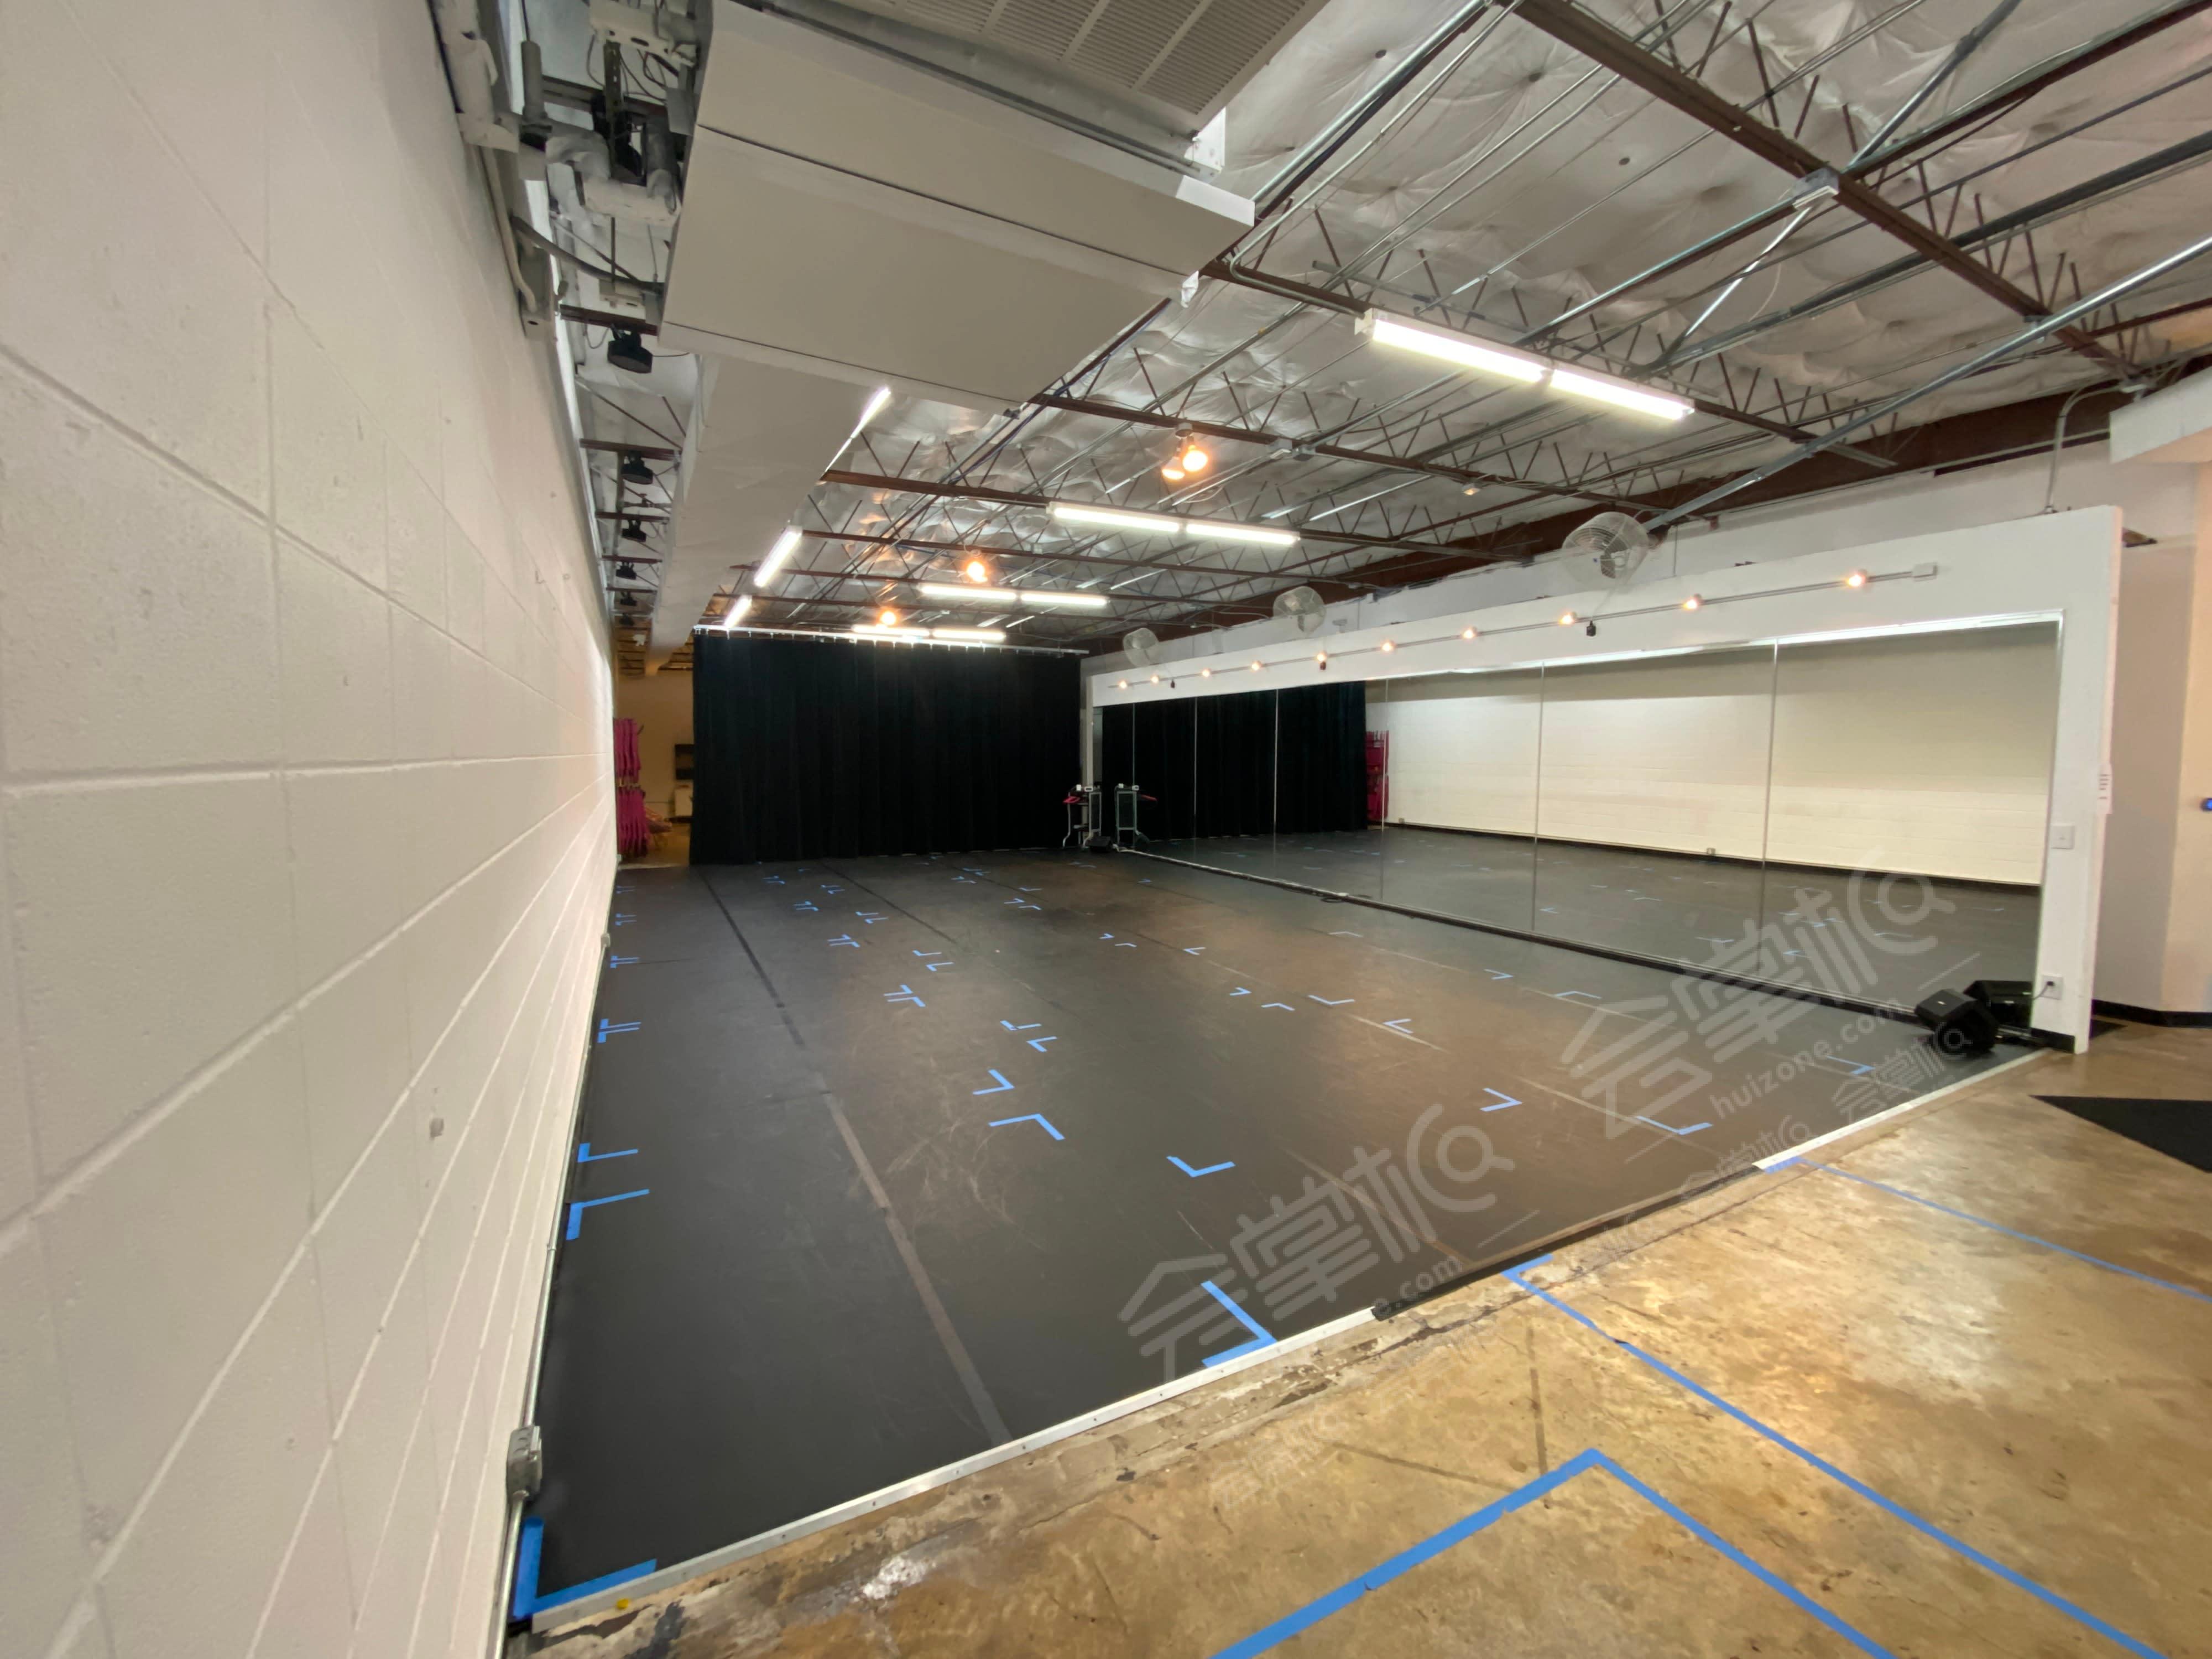 Yoga/dance studio space in centrally located Mueller area!